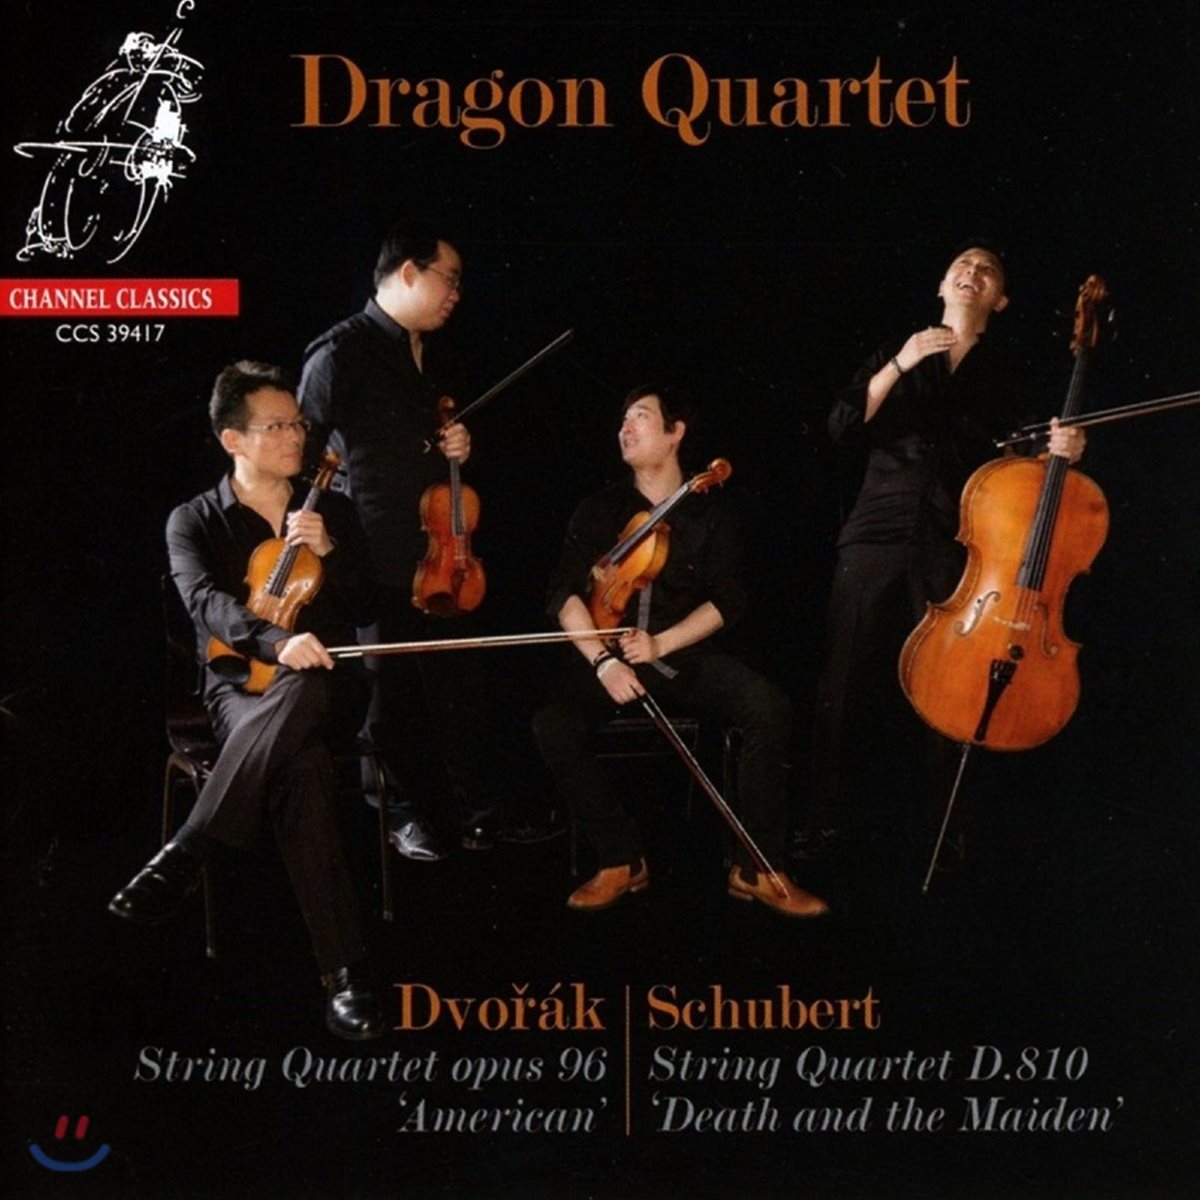 Dragon Quartet 드보르작: 현악 사중주 &#39;아메리카&#39; / 슈베르트: 죽음과 소녀 - 드라곤 콰르텟 (Dvorak / Schubert: String Quartets Op.96 &#39;American&#39; &amp; D.810 &#39;Death and the Maiden&#39;)